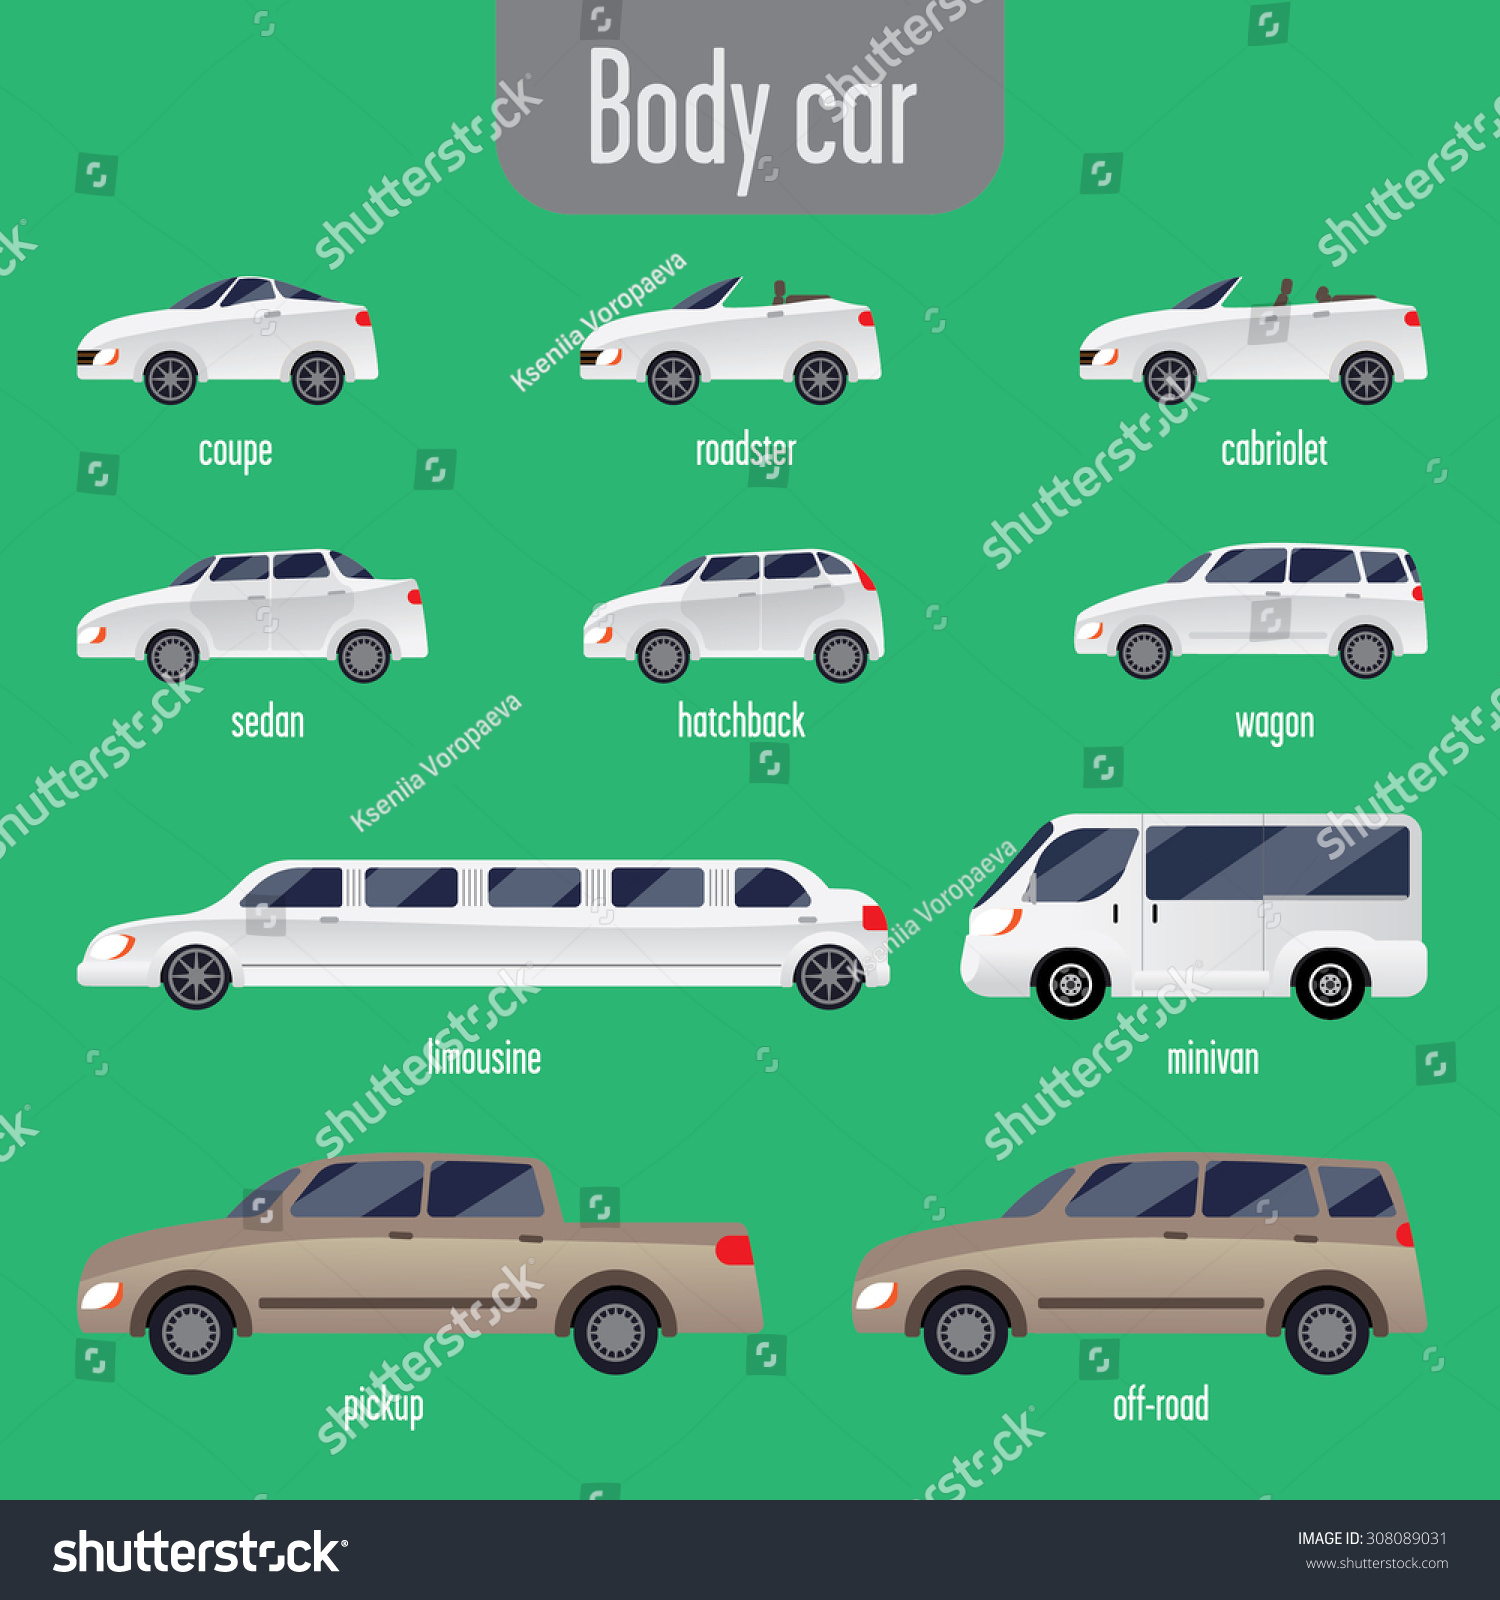 「difference between hatchback and sedan」的圖片搜尋結果